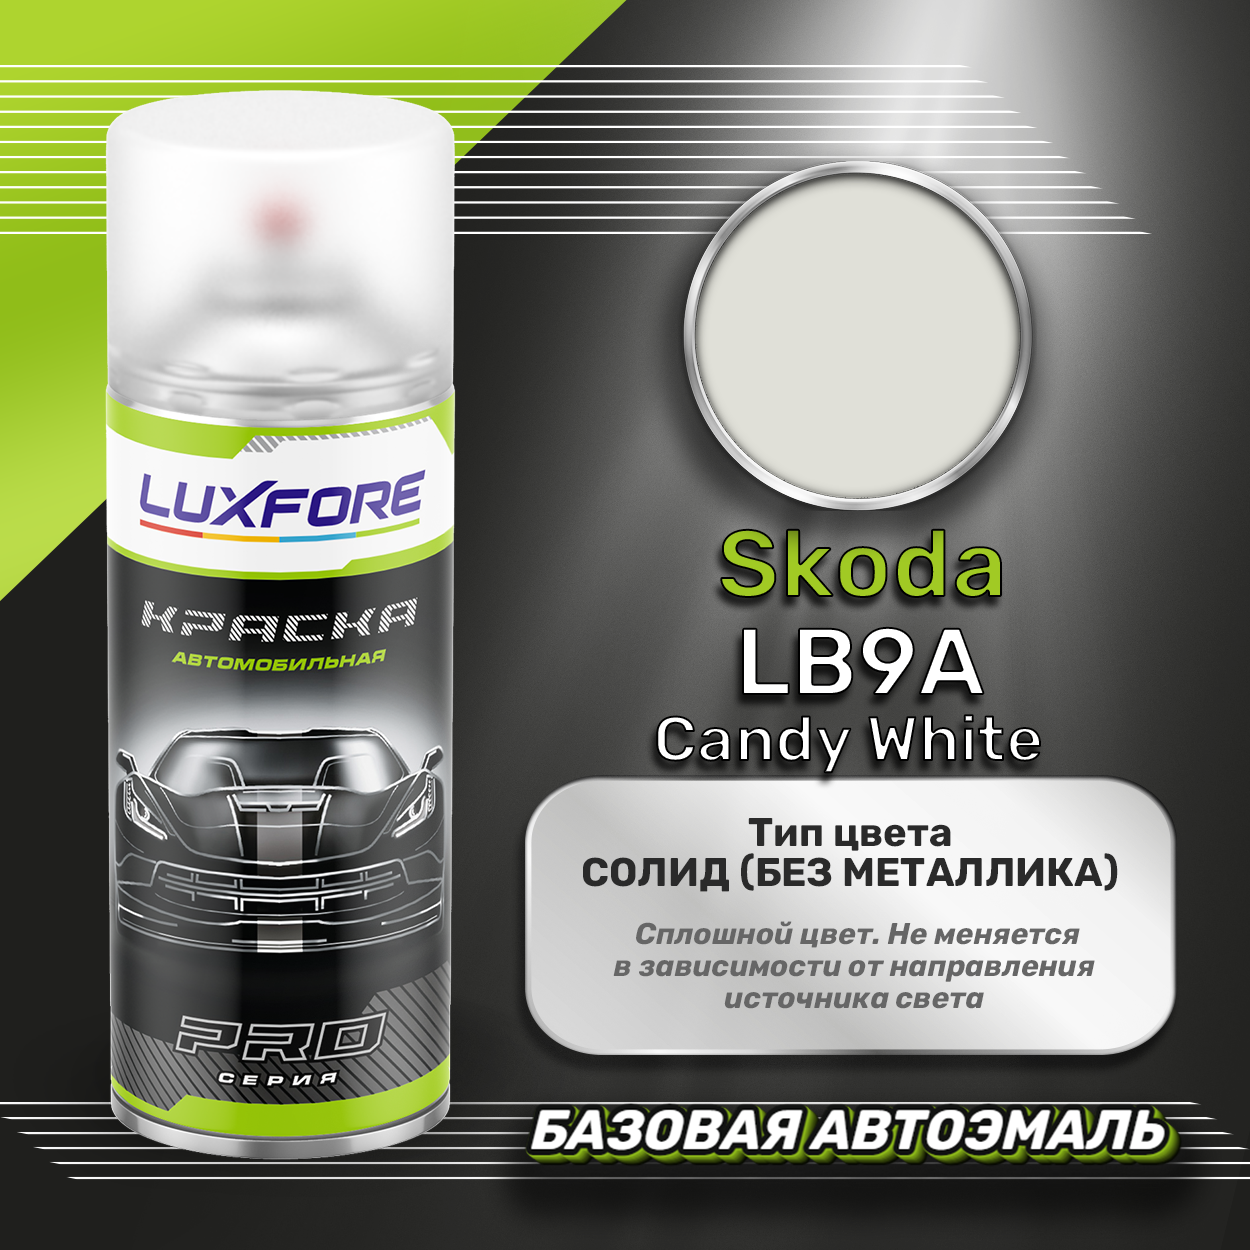 Luxfore аэрозольная краска Skoda LB9A Candy White 400 мл